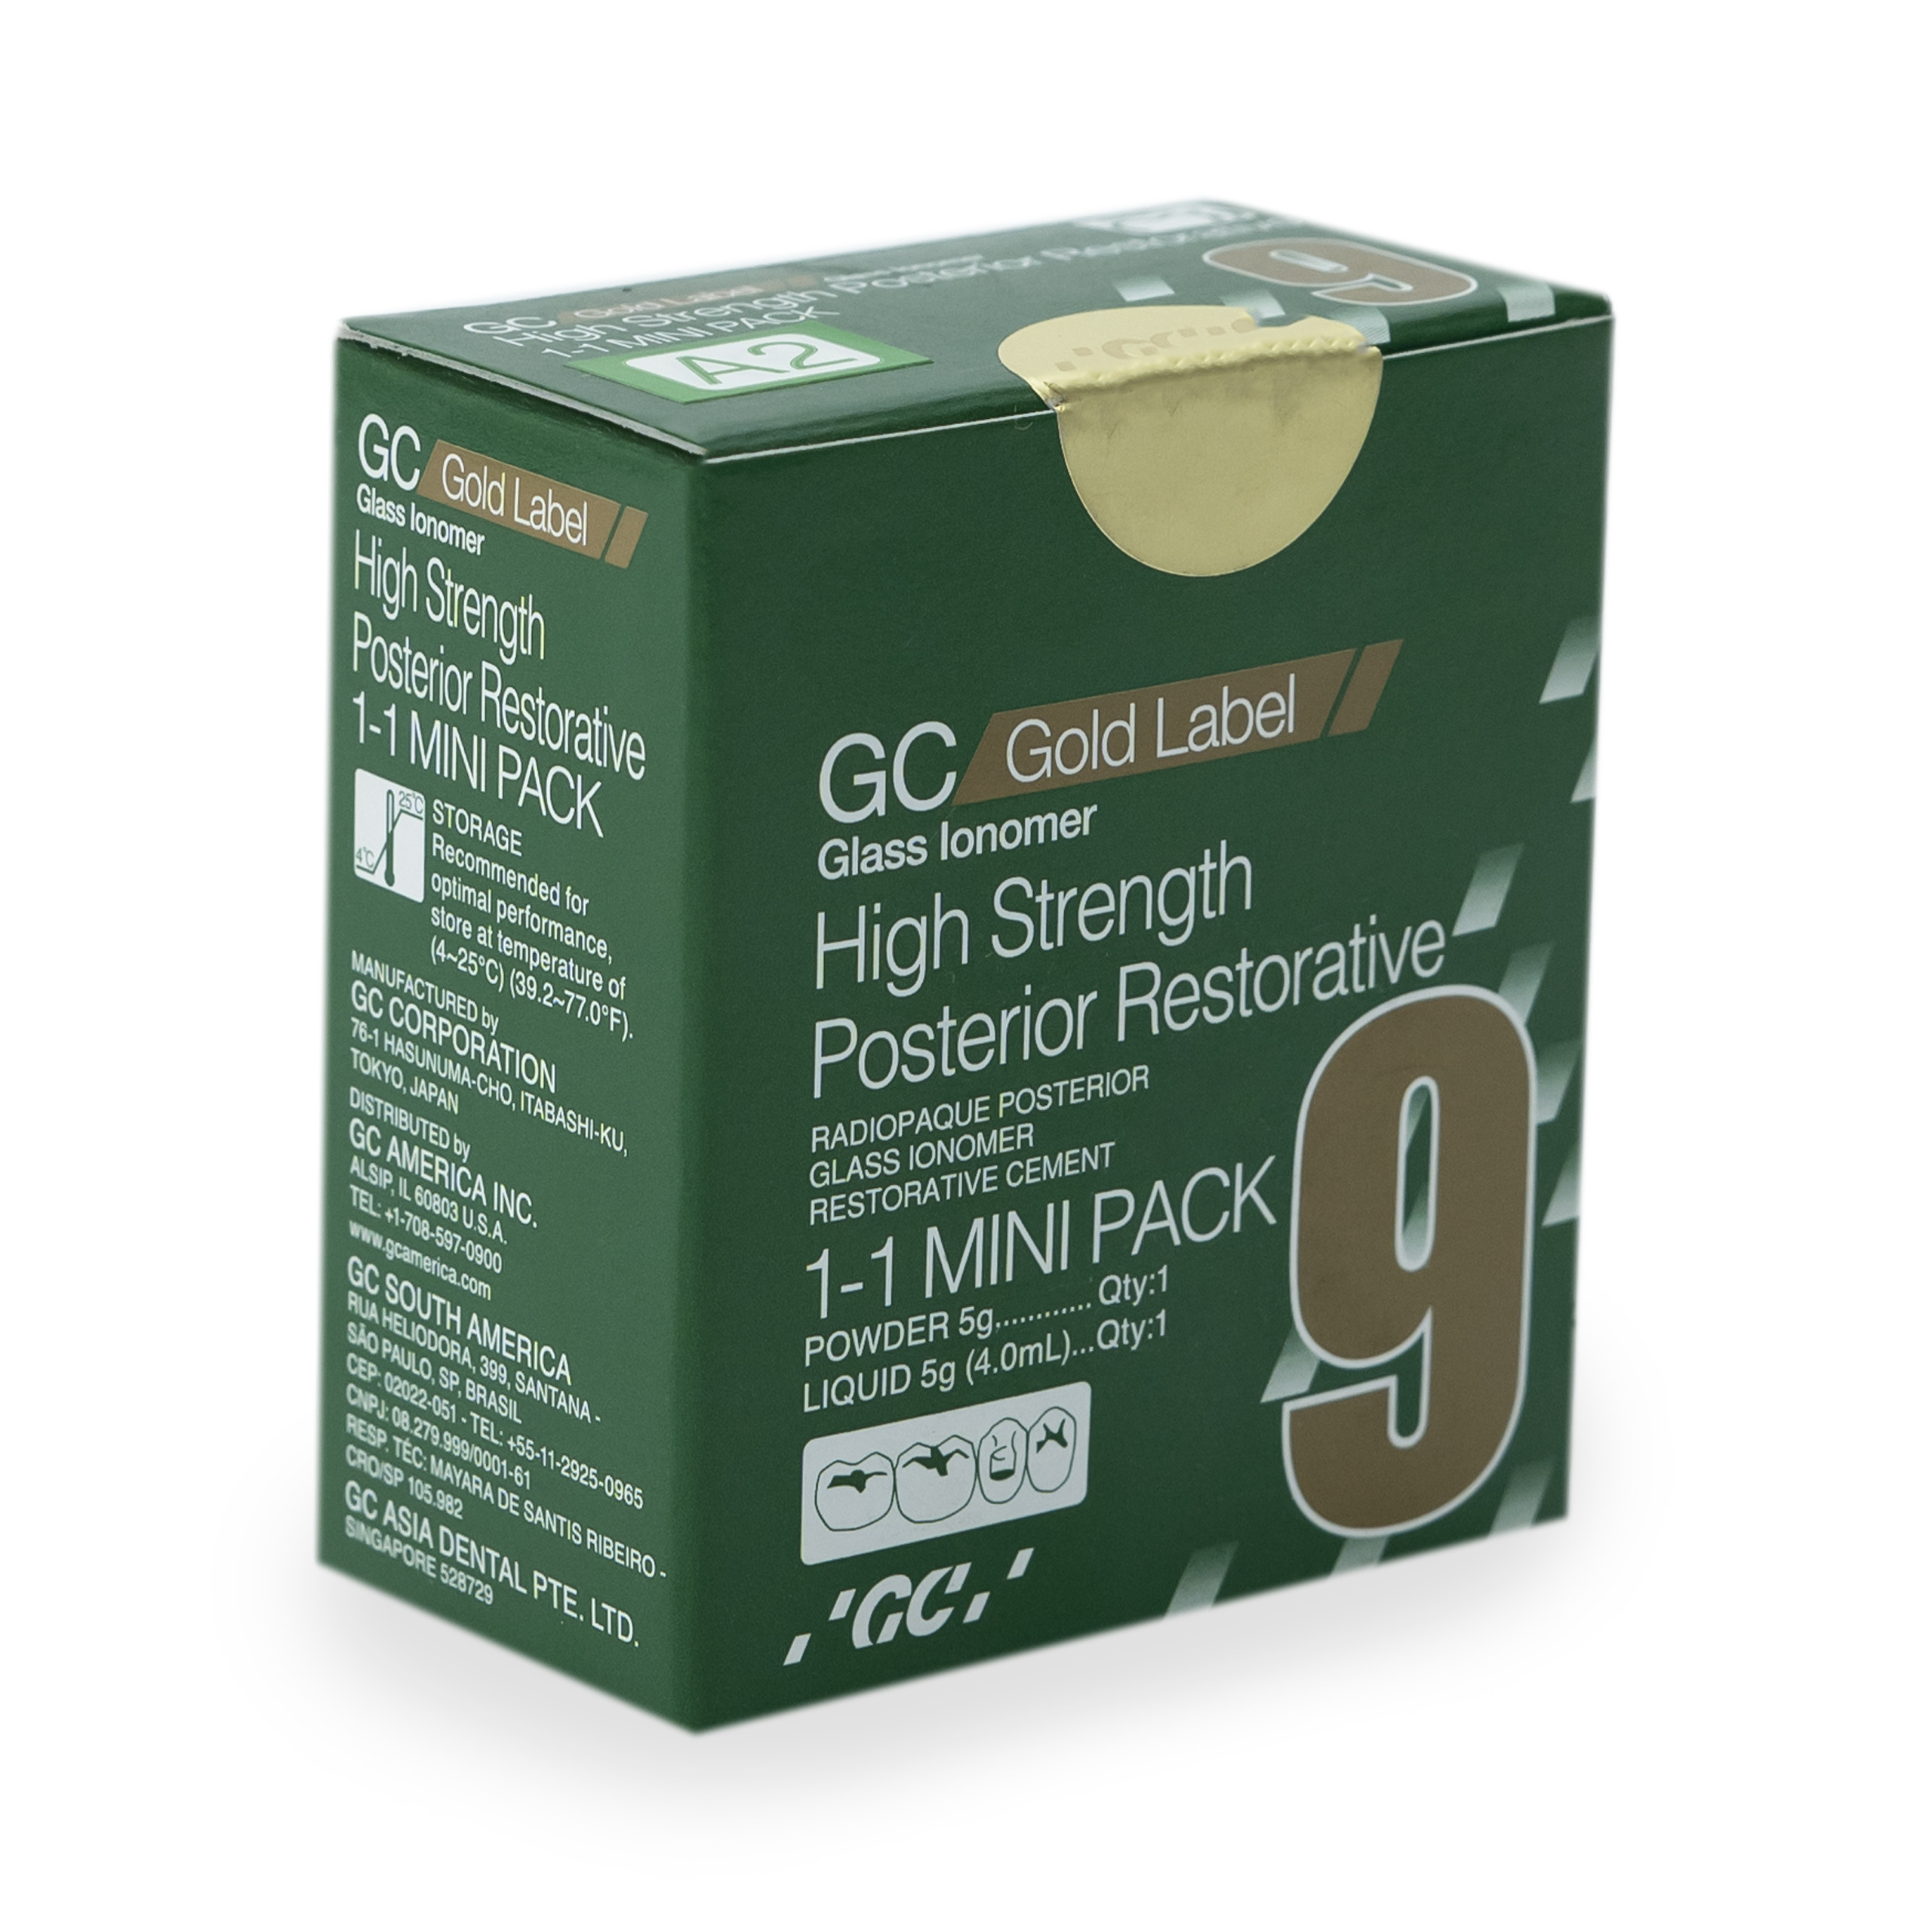 GC Gold Label Glass Ionomer High Strength Posterior Restorative Powder 5gm Liquid 5gm